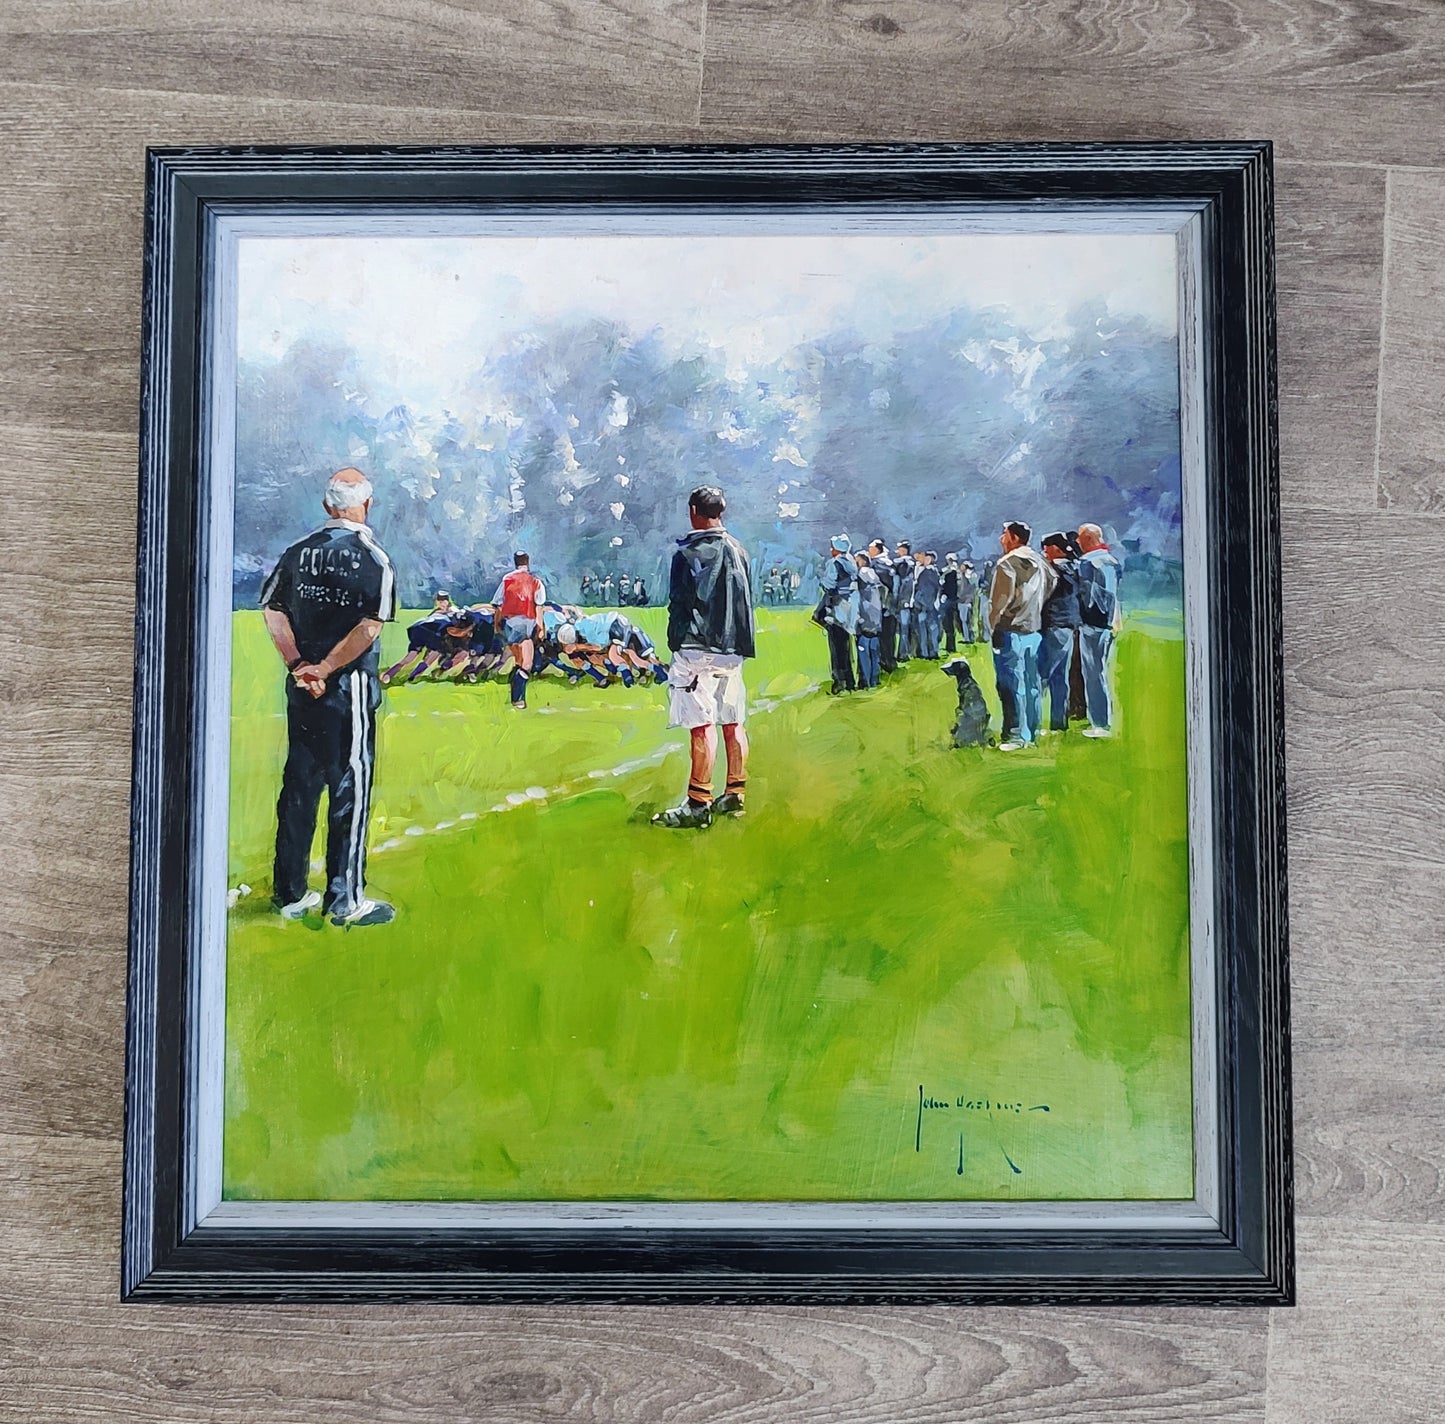 John Haskins art- 'Scrum' Framed Original on Board of a Rugby Match